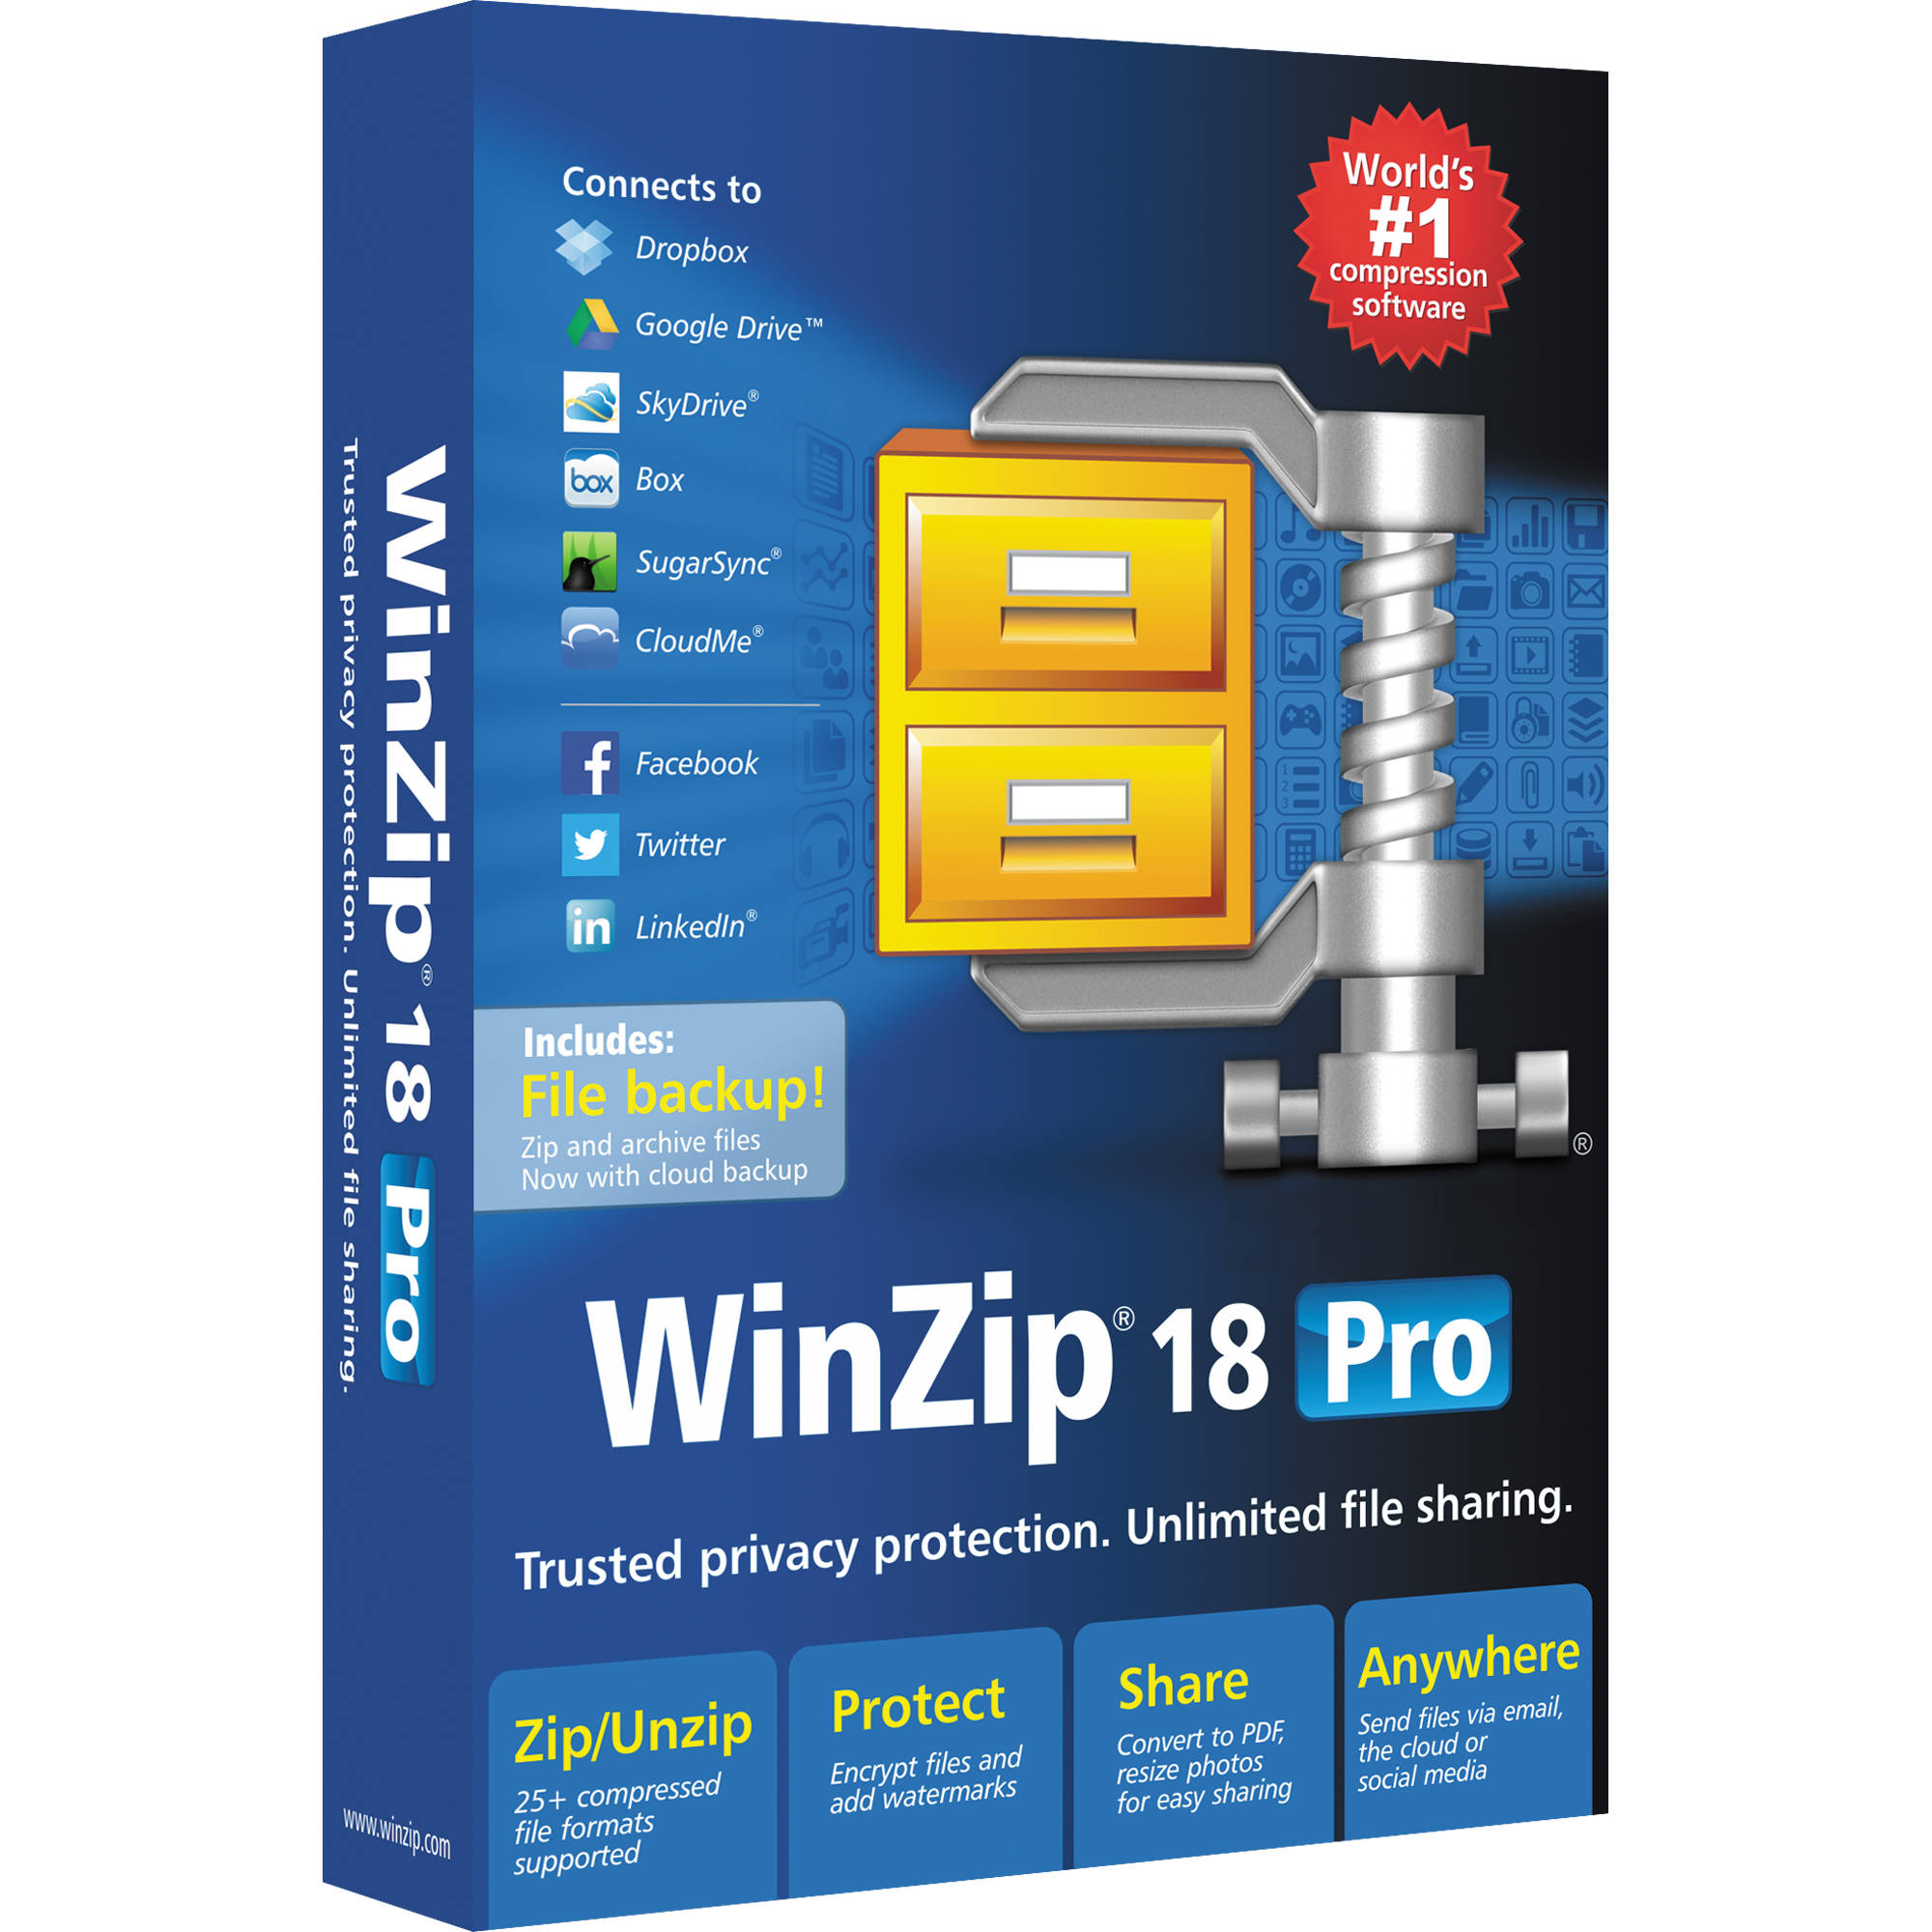 winzip 21.5 standard edition free download